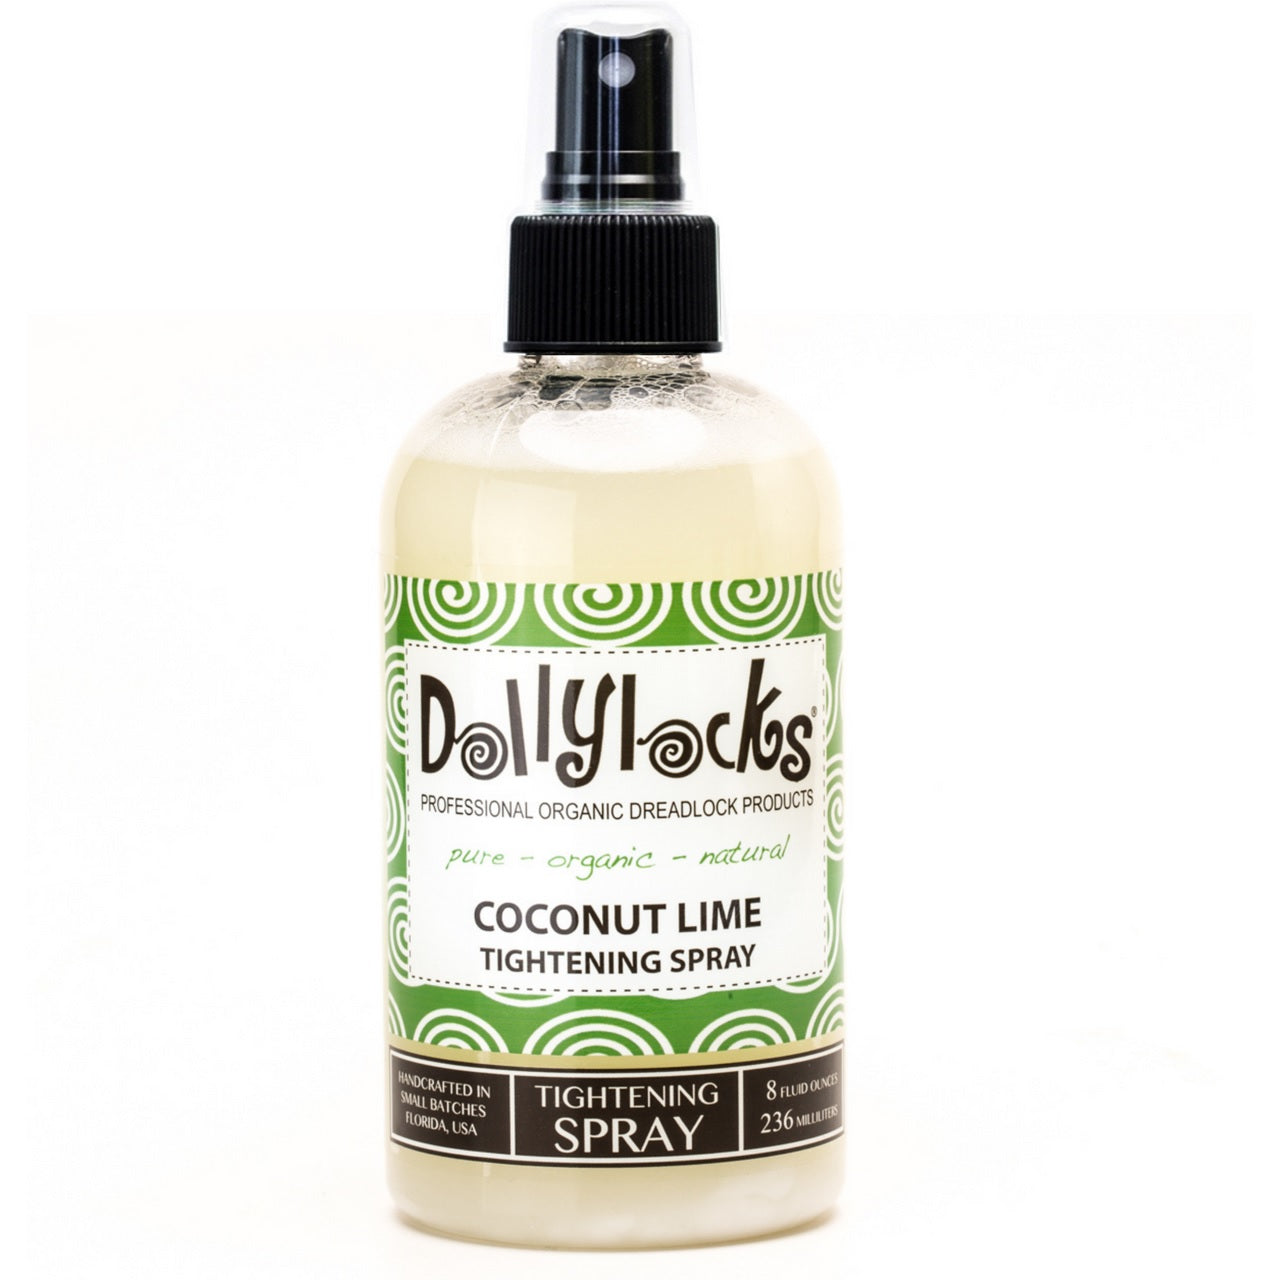 Dollylocks - Dreadlocks Tightening Spray - Coconut Lime (8oz/236ml)